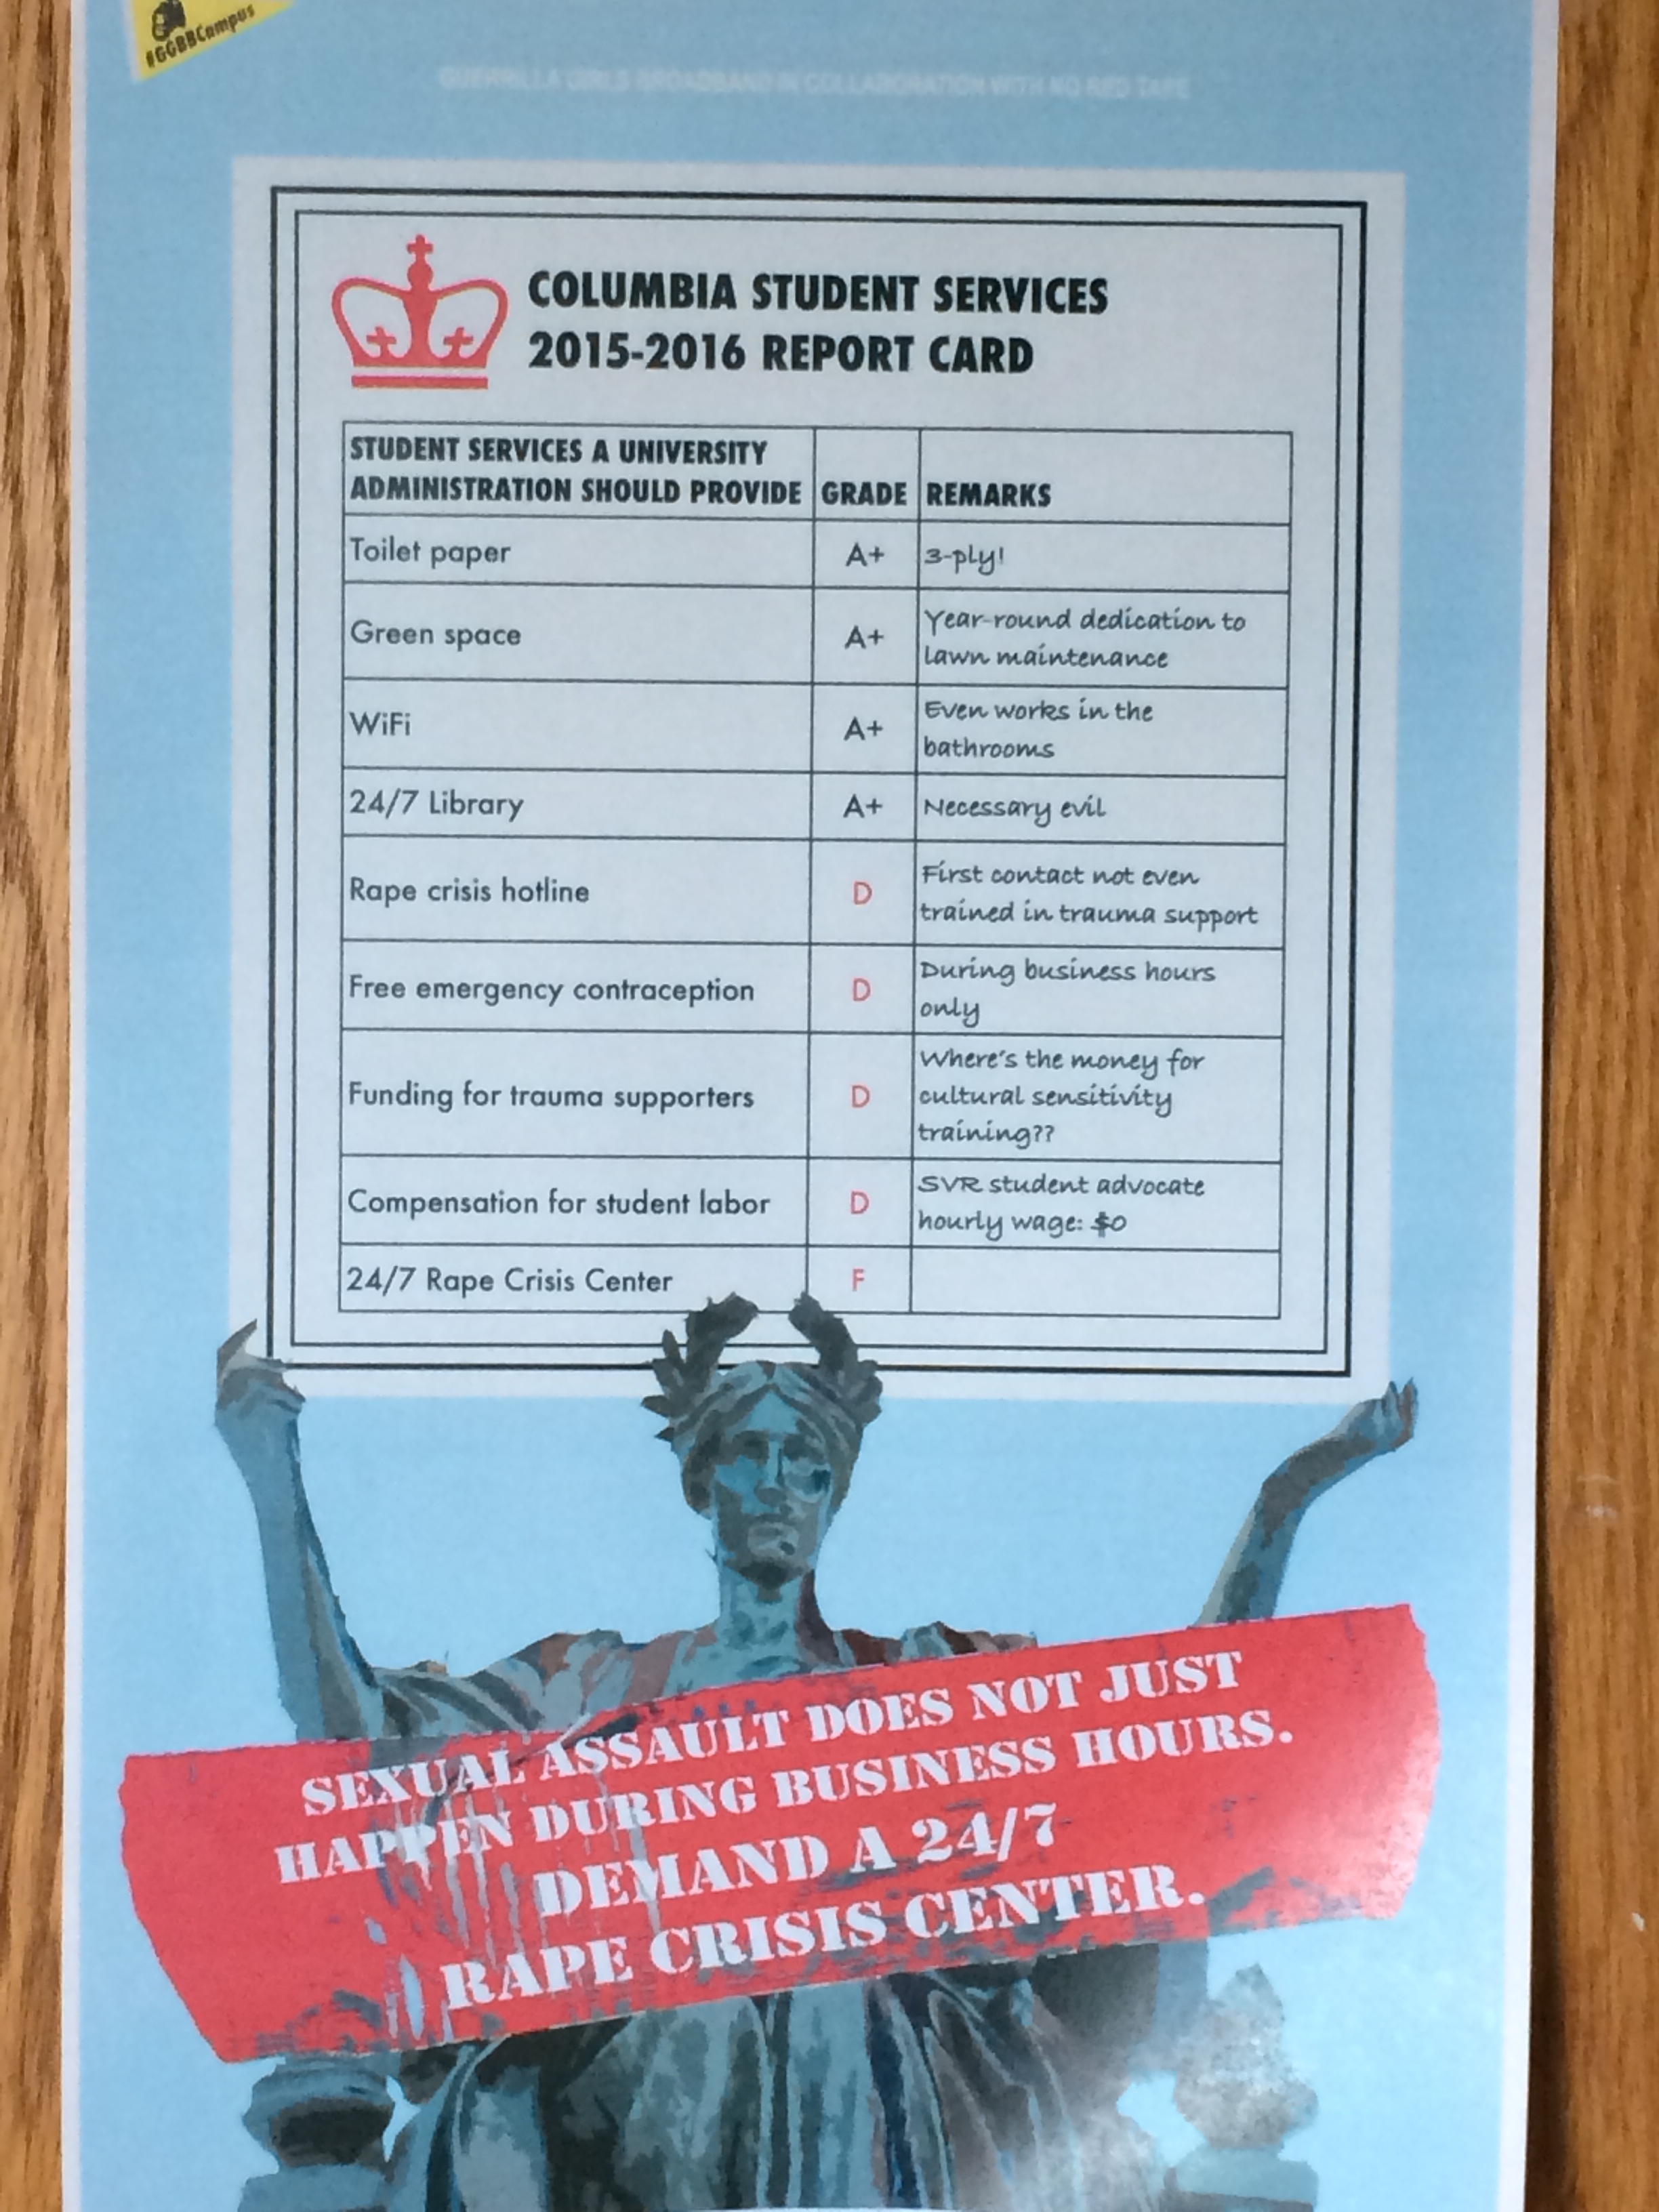 Columbia's 2015-2016 report card